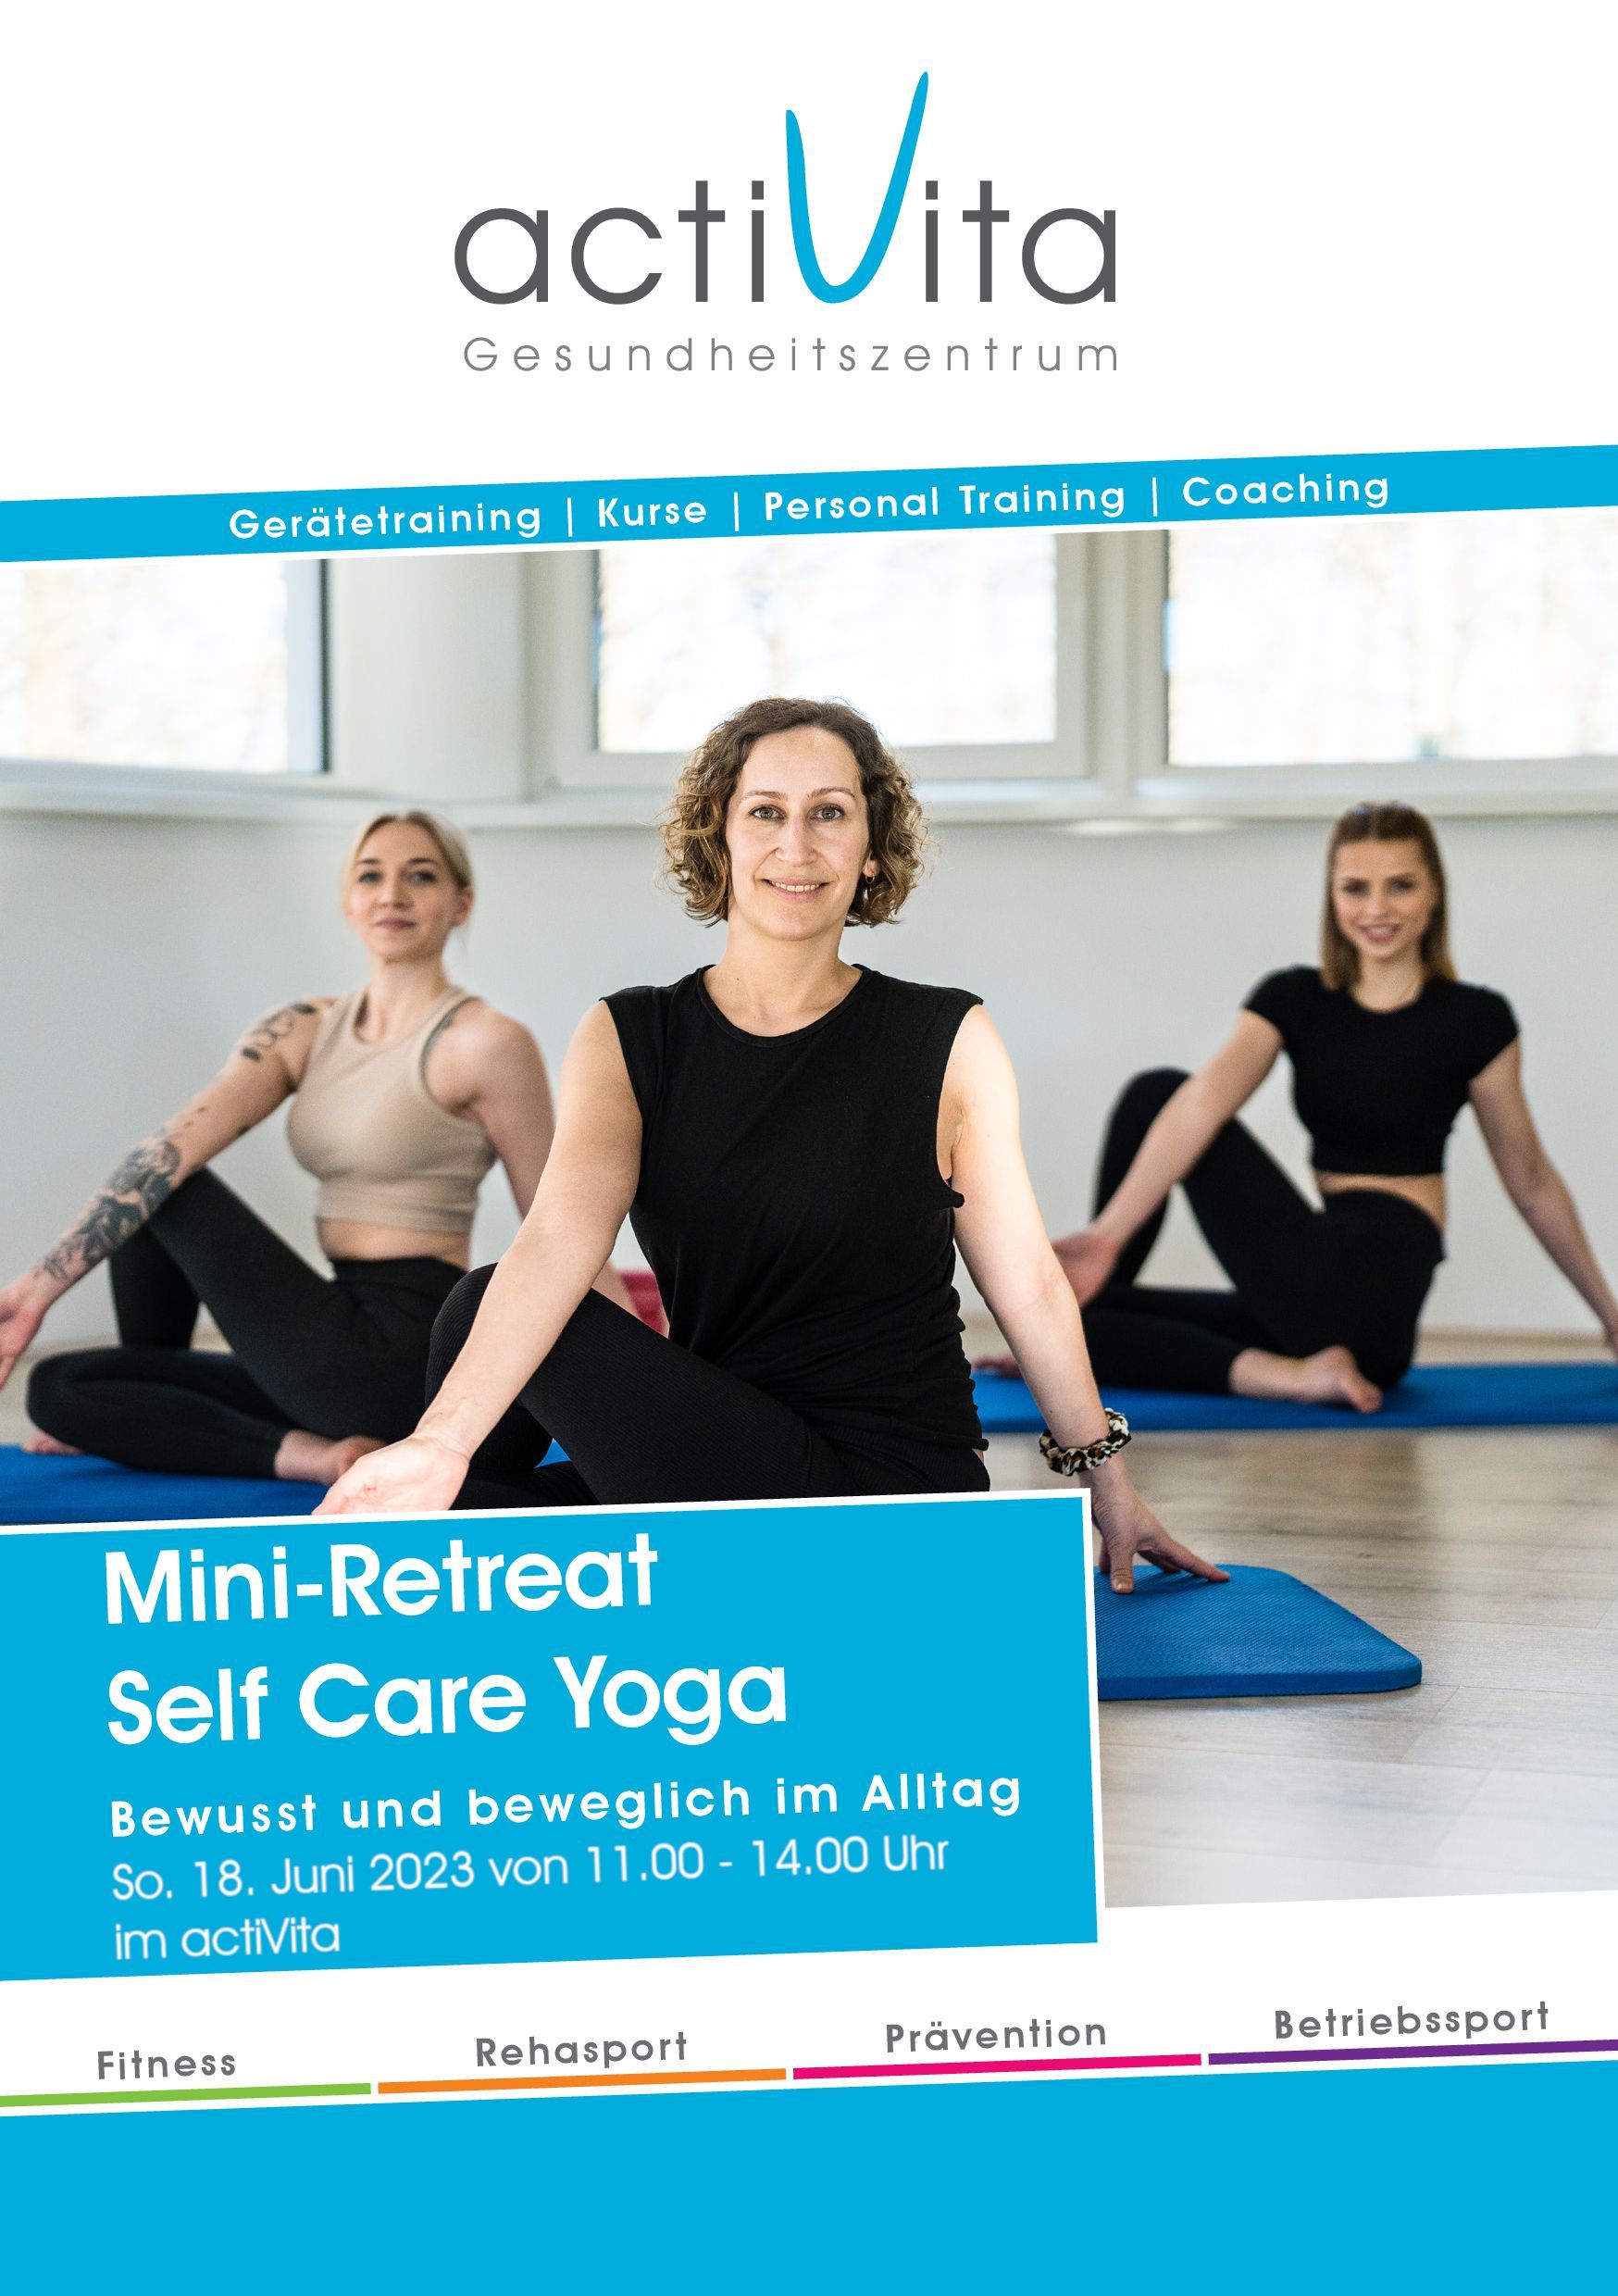 Fitness Yoga Reha Prävention, Activita Paderborn